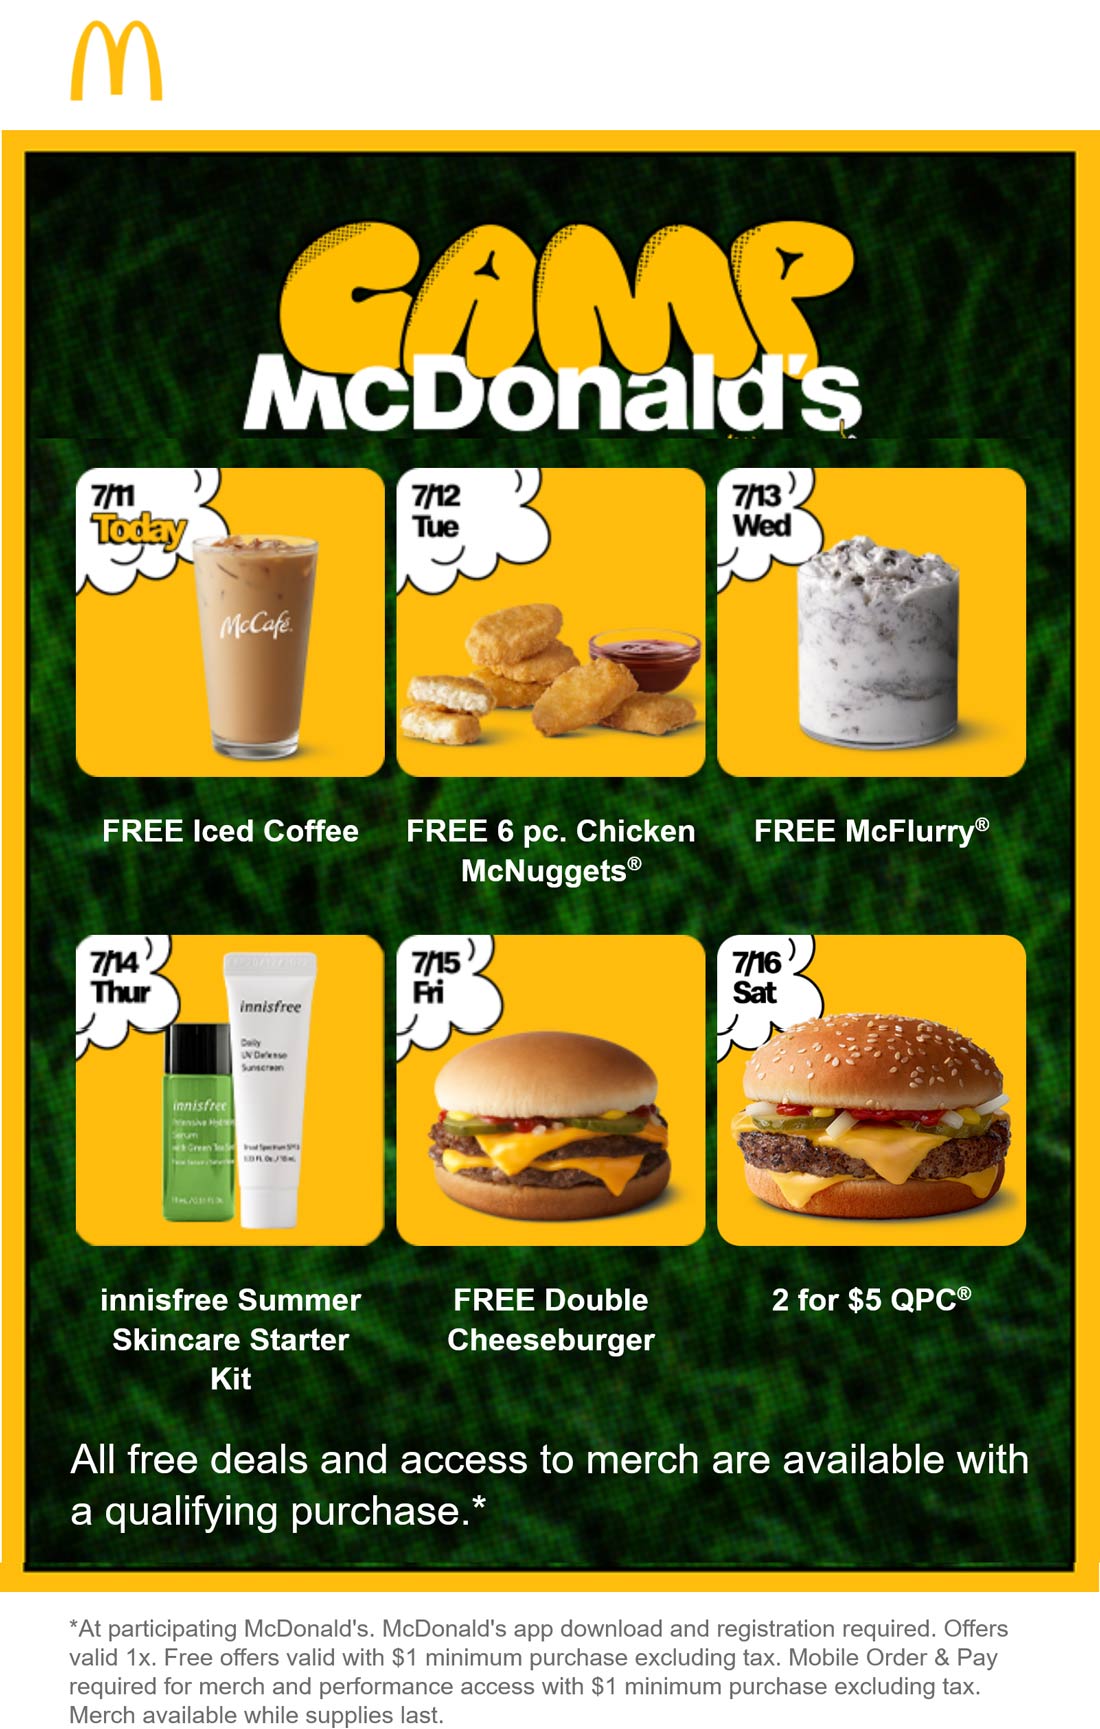 McDonalds restaurants Coupon  Free double cheeseburger & more this week via mobile at McDonalds #mcdonalds 